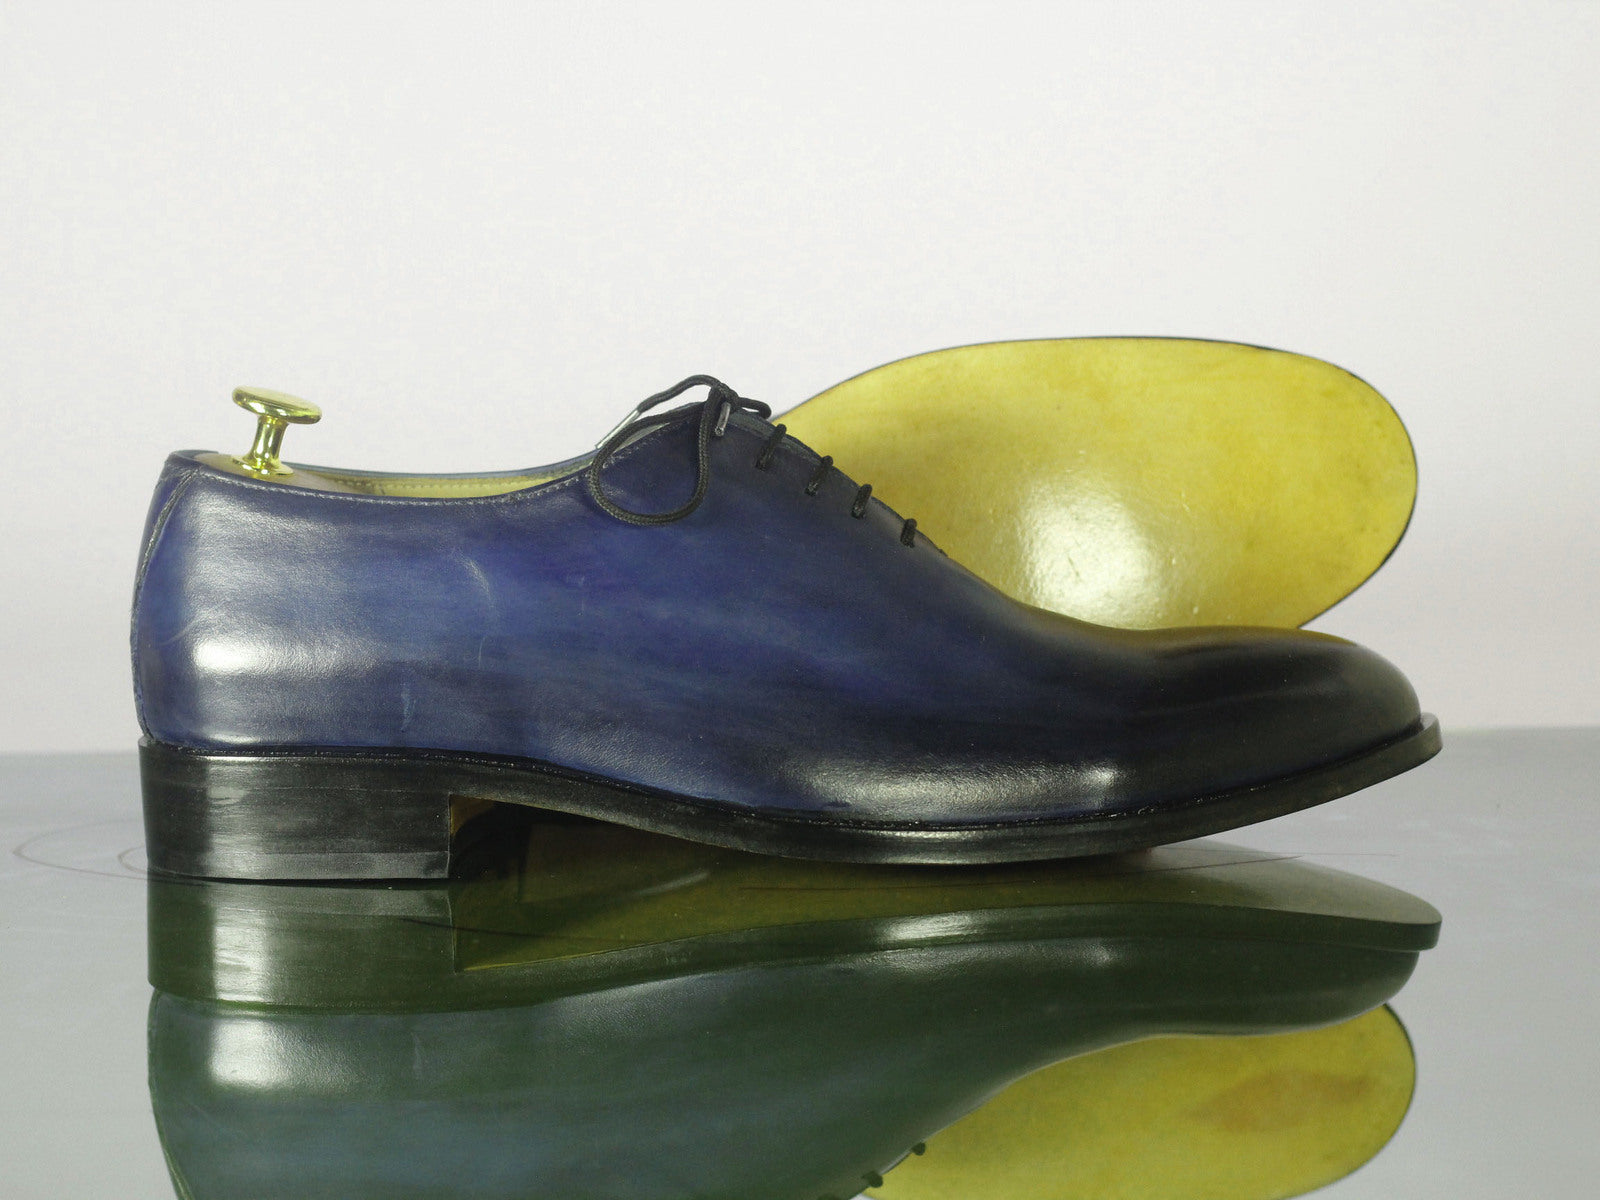 Handmade Mens Navy blue Leather Oxfords shoes. Men blue leather dress shoes